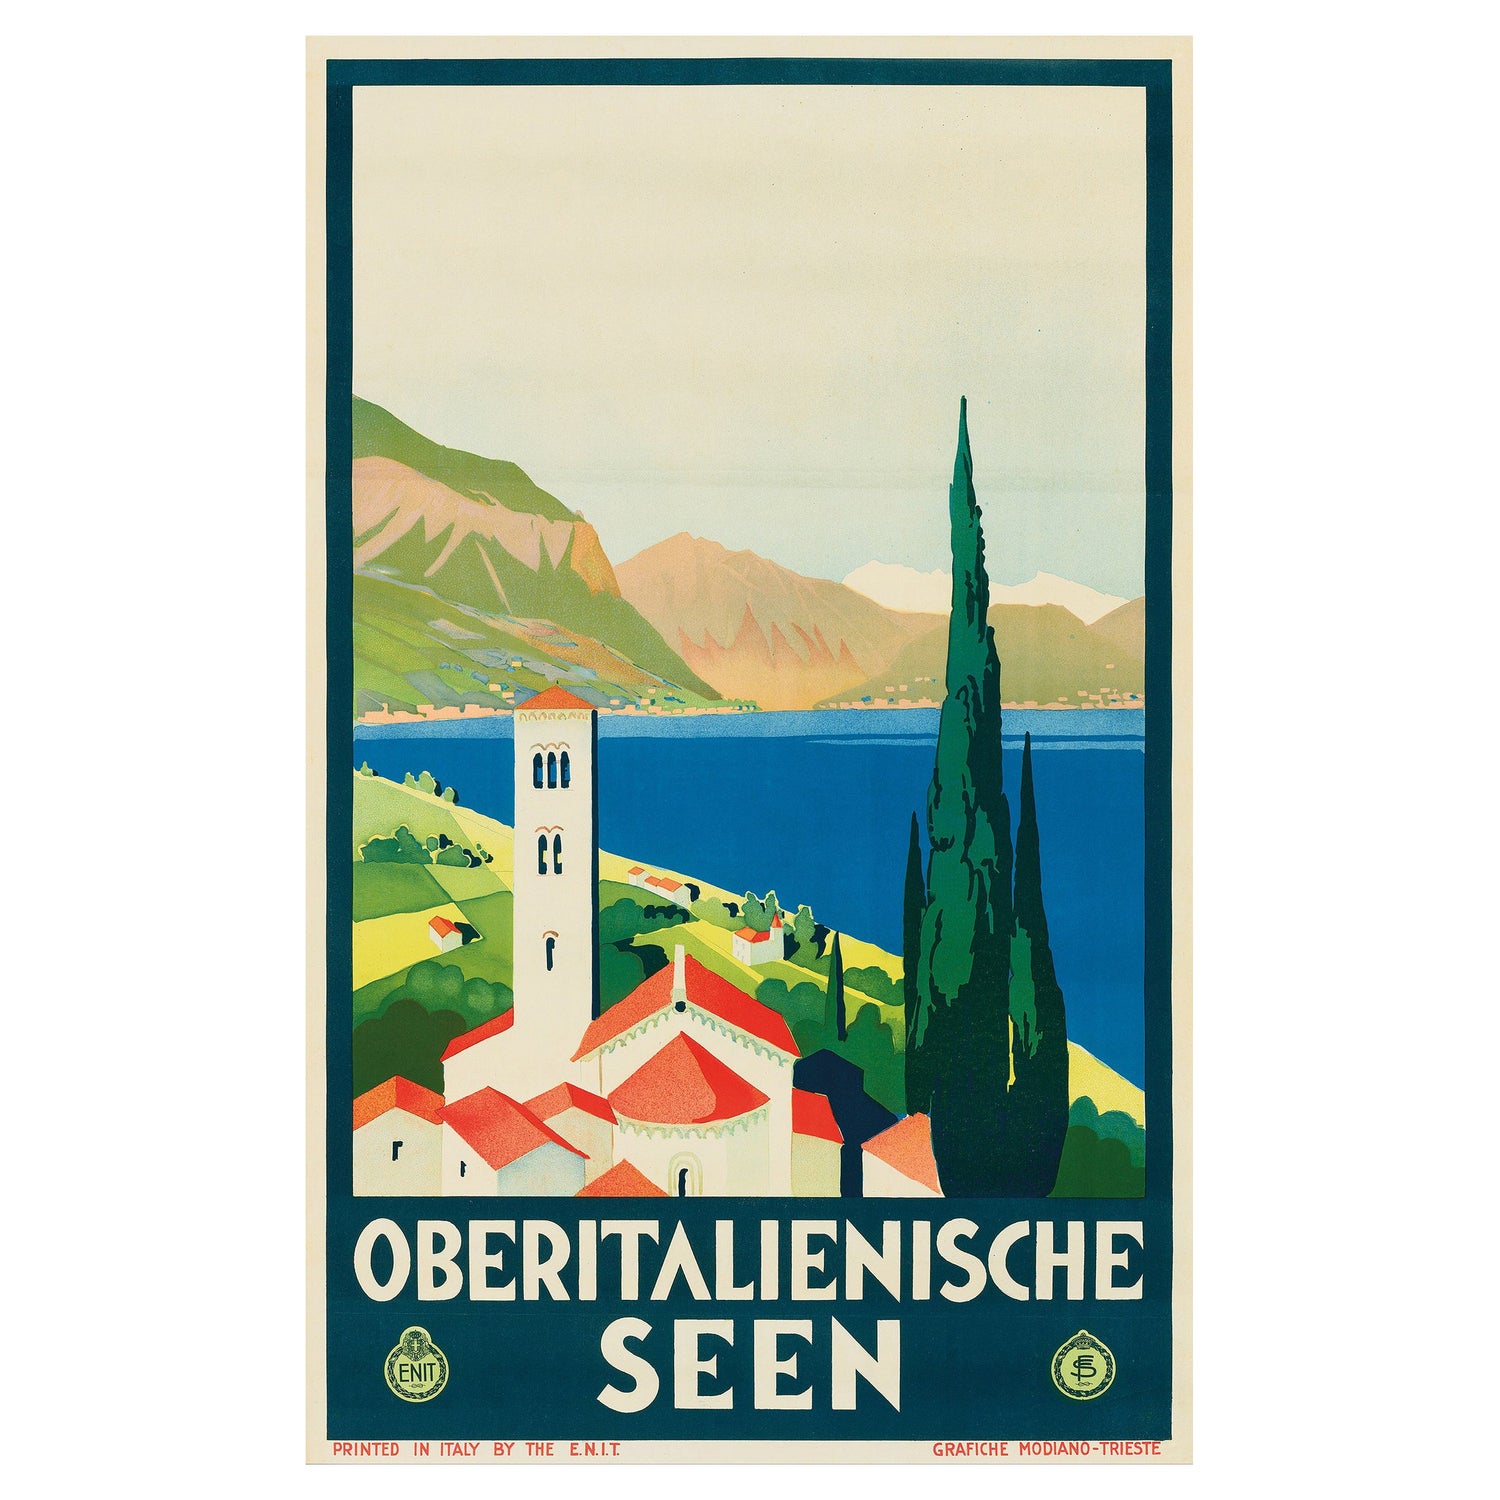 Original Vintage Italy Travel Poster Stresa Borromeo Lake Maggiore Islands  ENIT at 1stDibs | italy posters vintage, poster vintage italy, retro italy  poster